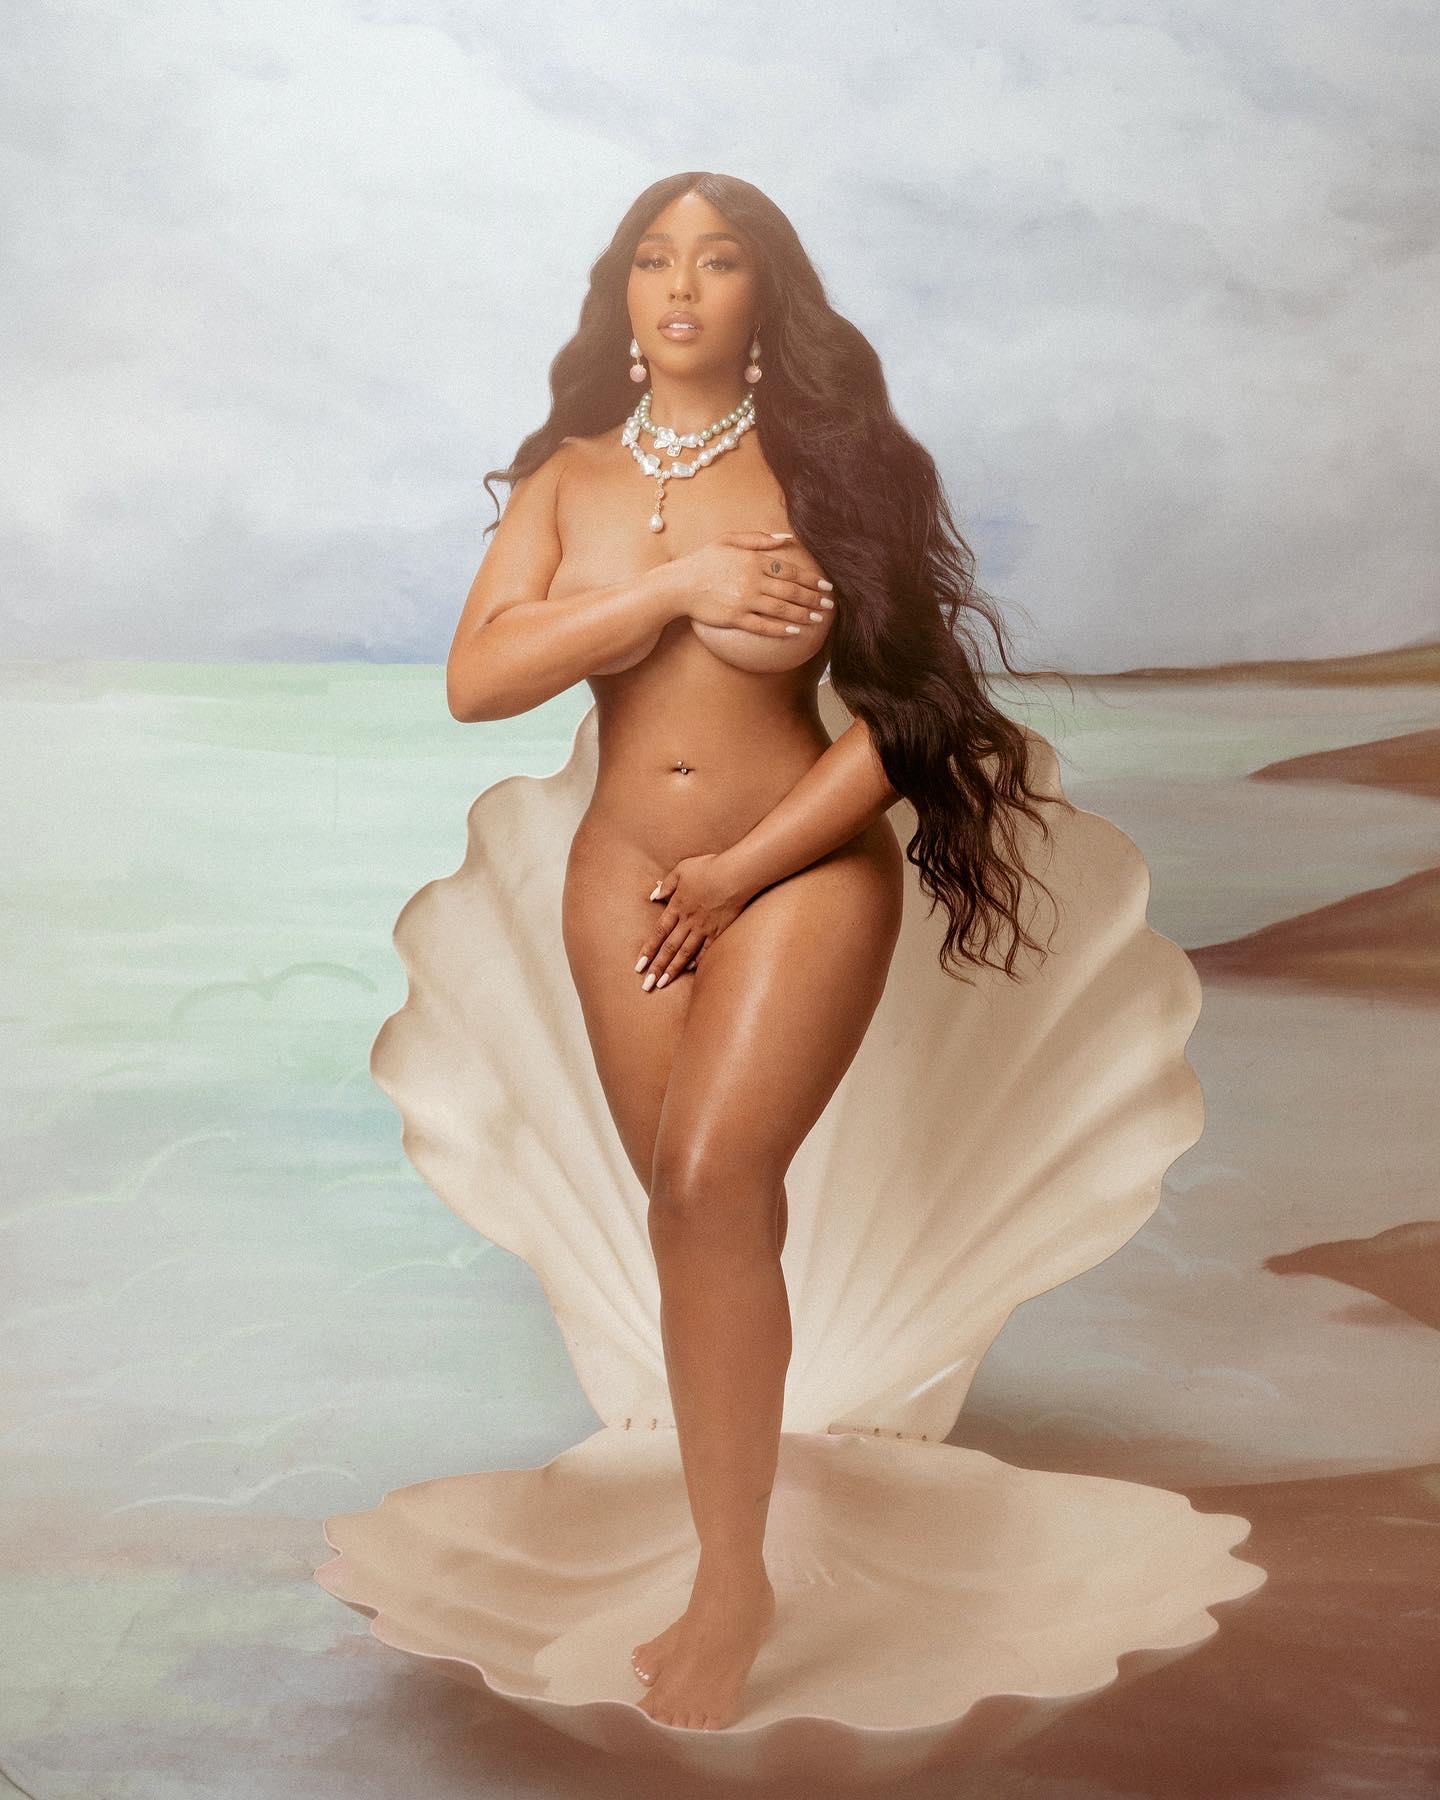 Jordyn Woods replicates "The Birth of Venus" to celebrate her 25th birthday